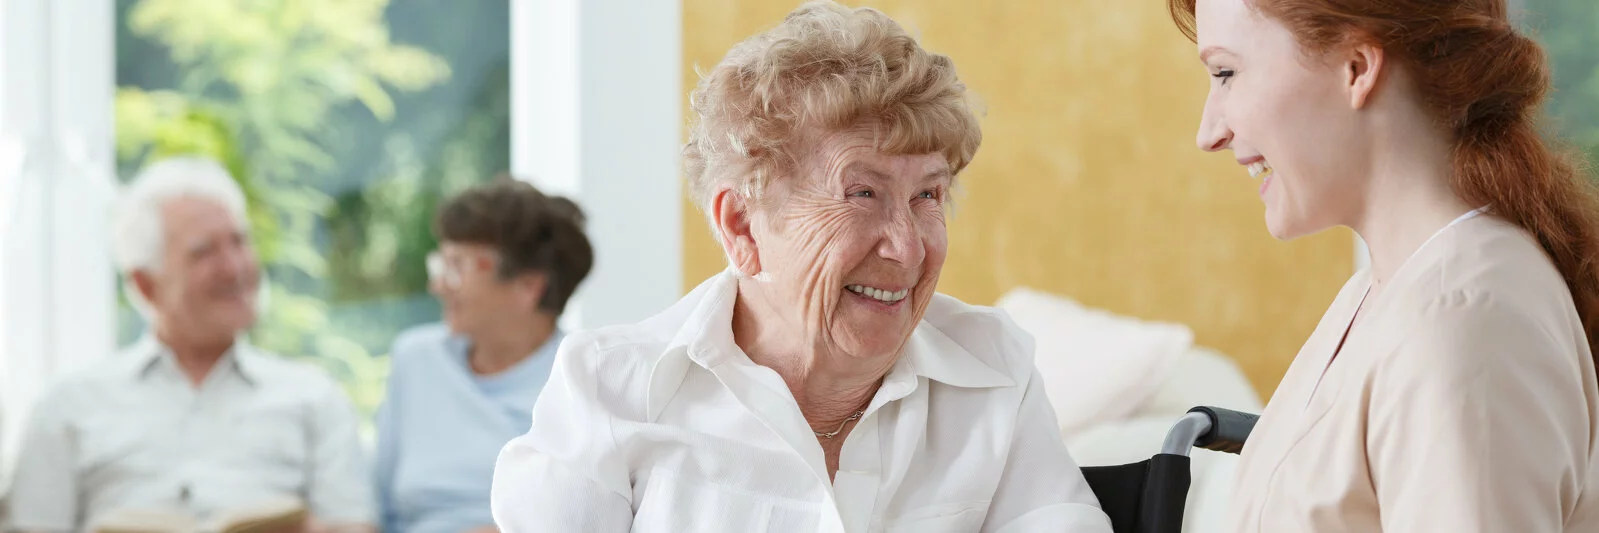 Happy senior woman talking with friendly nurse at geriatric ward 2022/03/AdobeStock_167476781.jpeg 